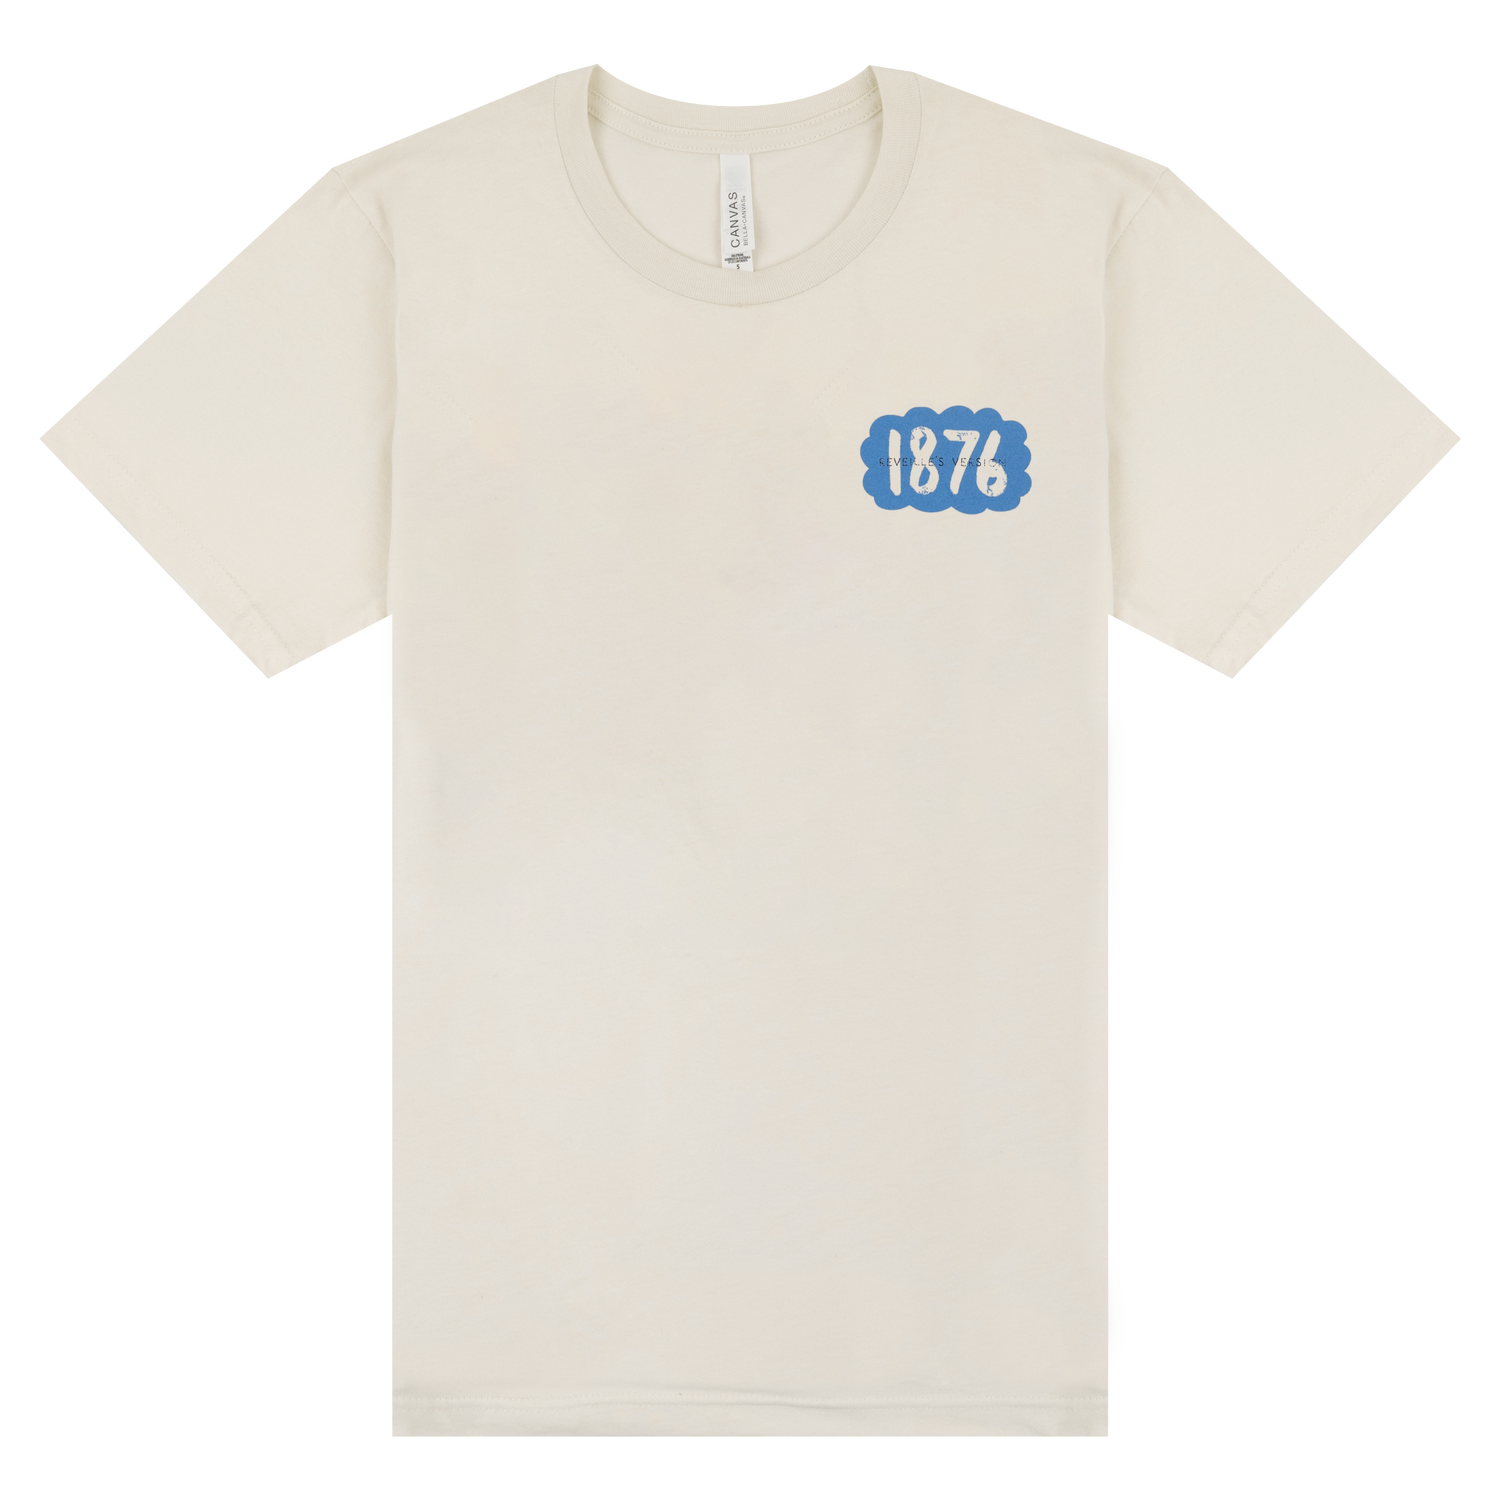 Reveille's Version 1876 T-Shirt